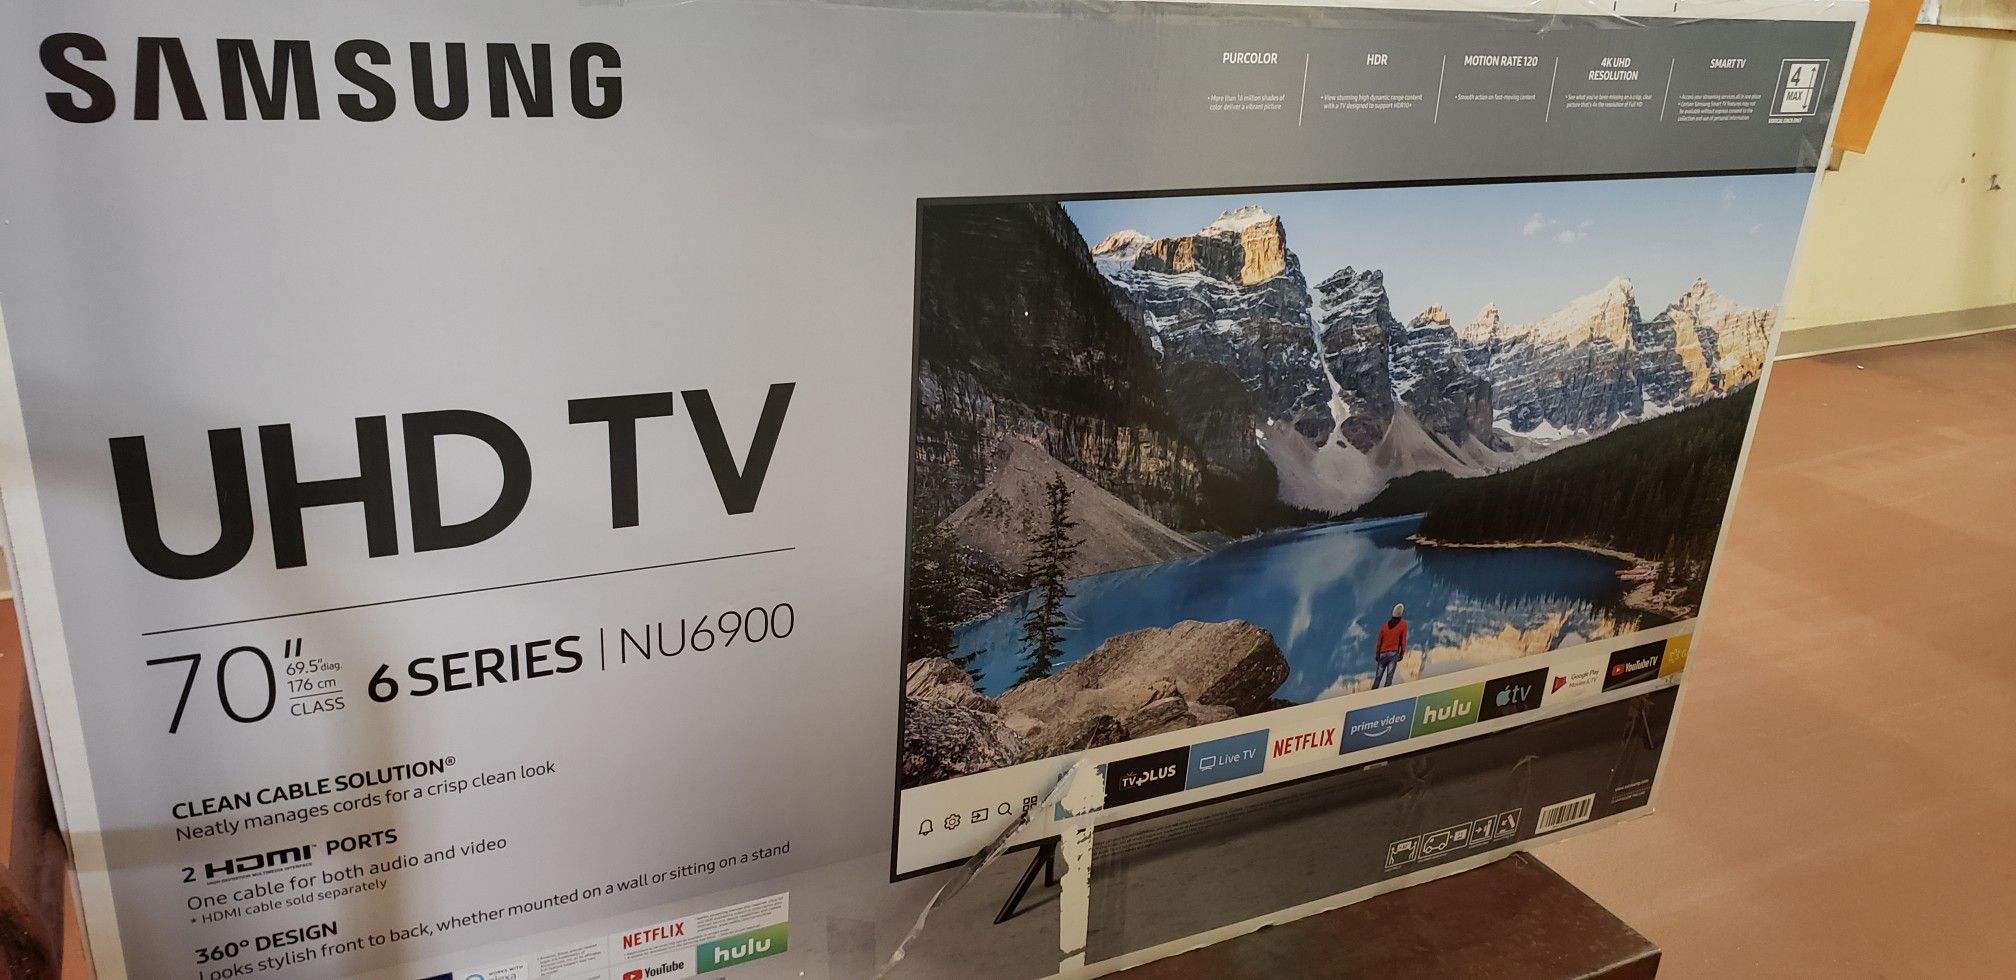 Samsung 70 inch smart 4k ultra HD TV UN70NU6900